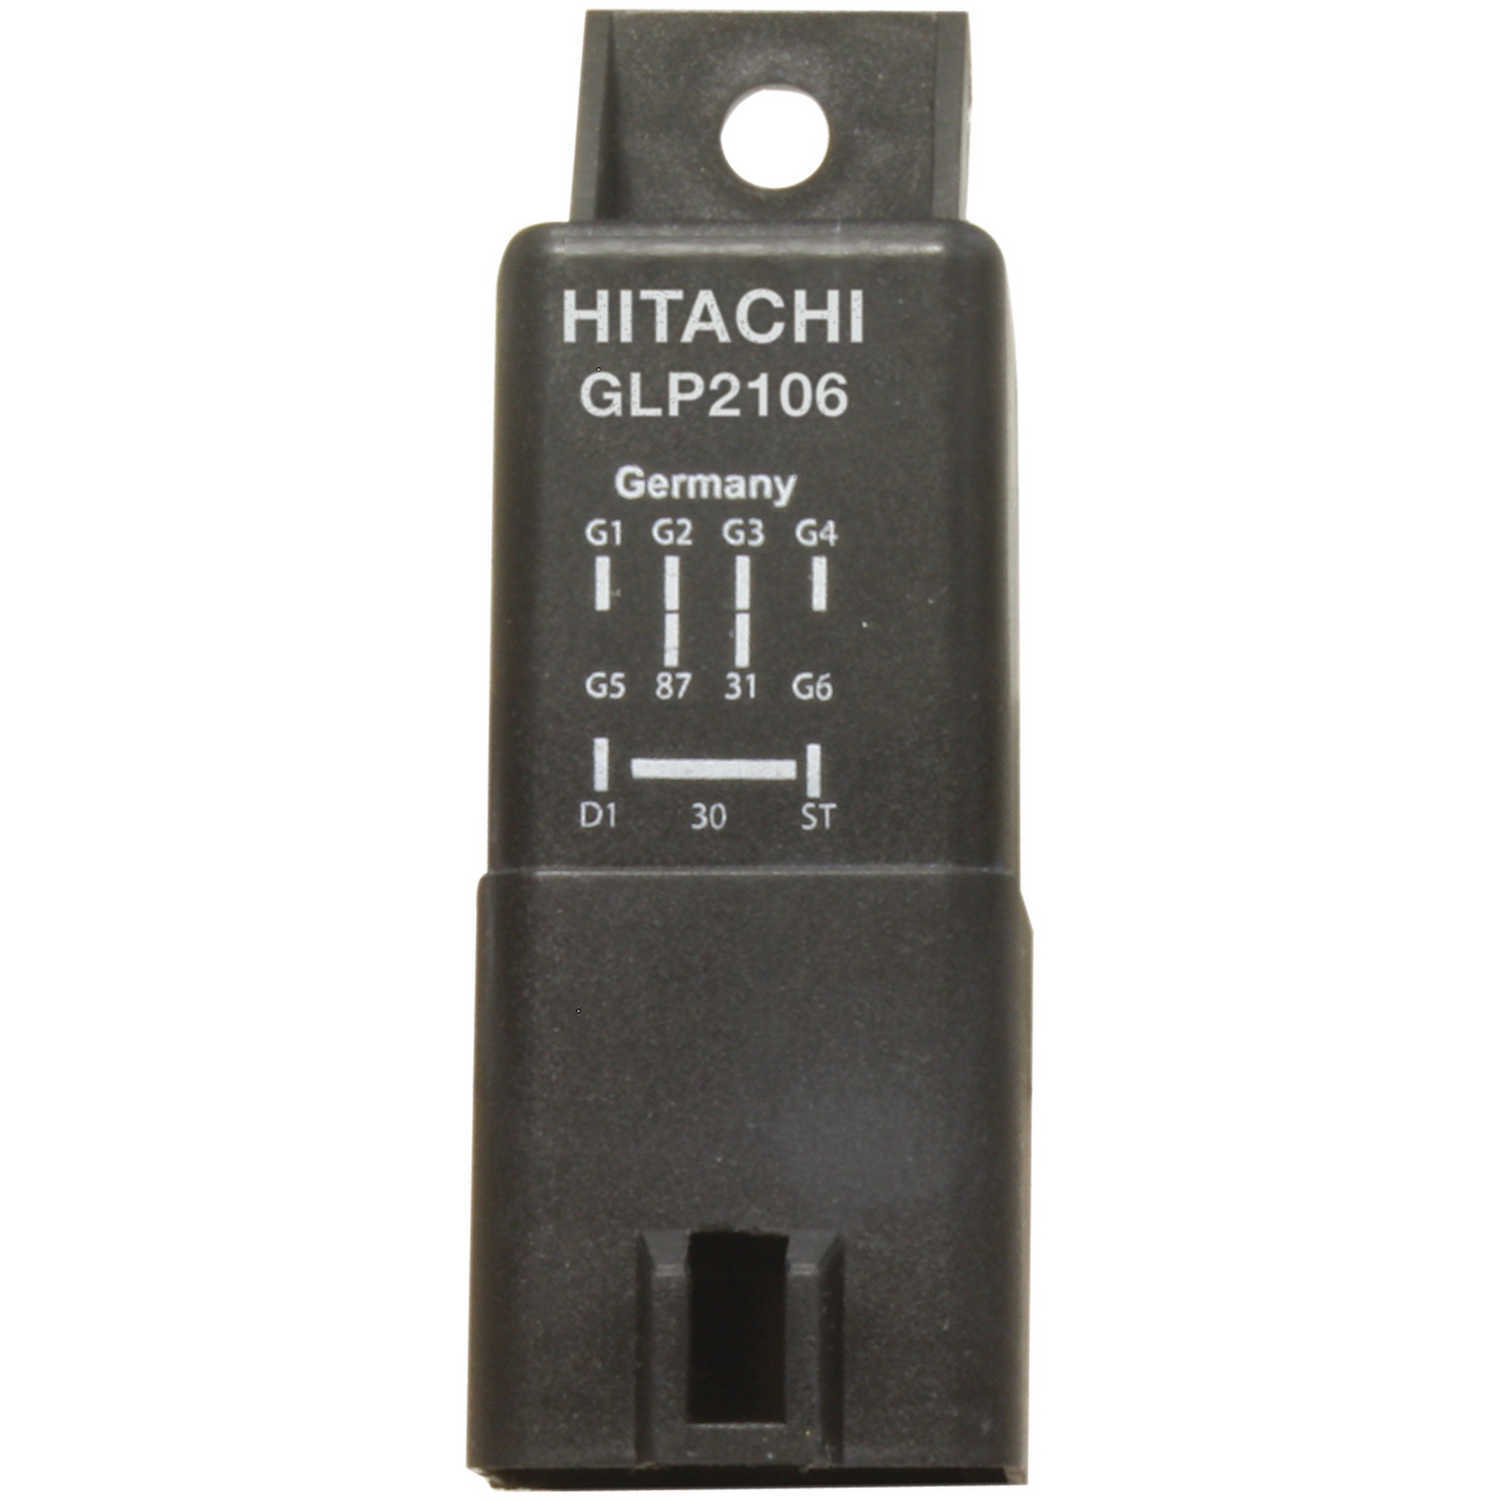 HITACHI - Diesel Glow Plug Relay - HTH GLP2106